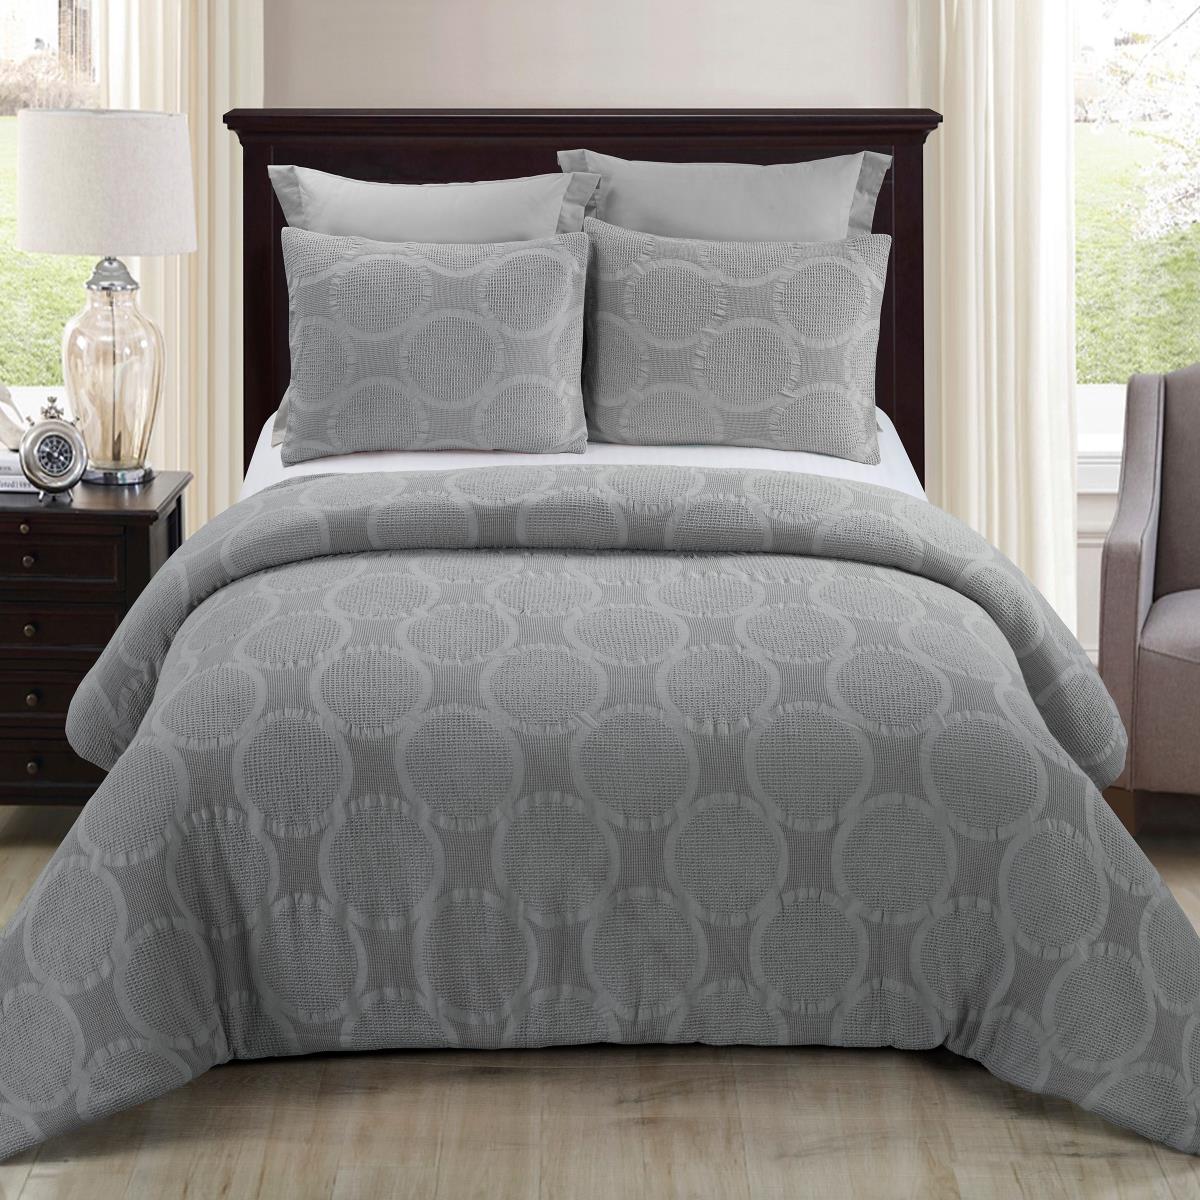 Y00423 King Size Comforter Set - Leon Grey